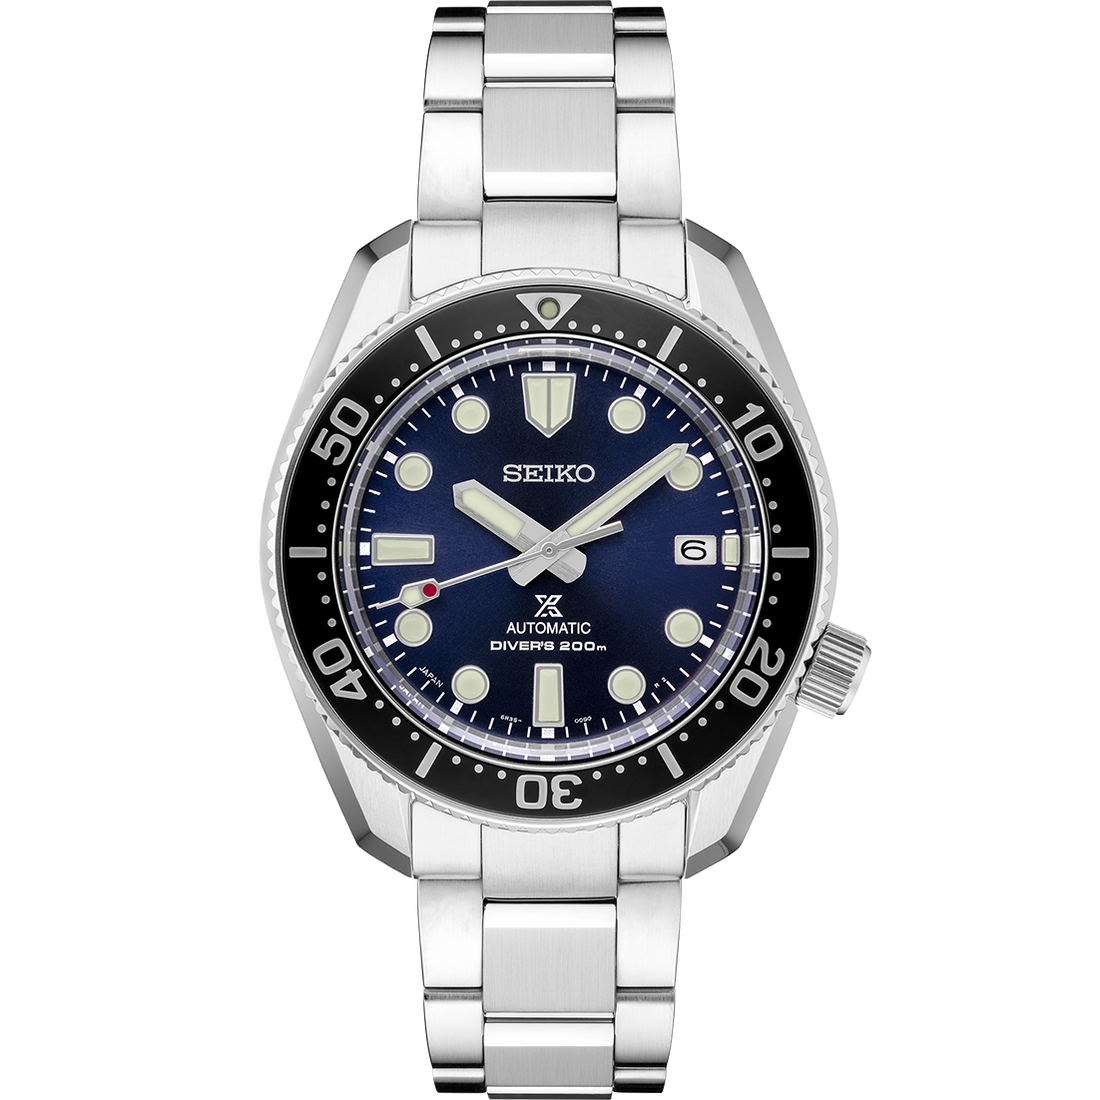 Seiko Prospex SPB187 1968 Diver's Reinterpretation Watch